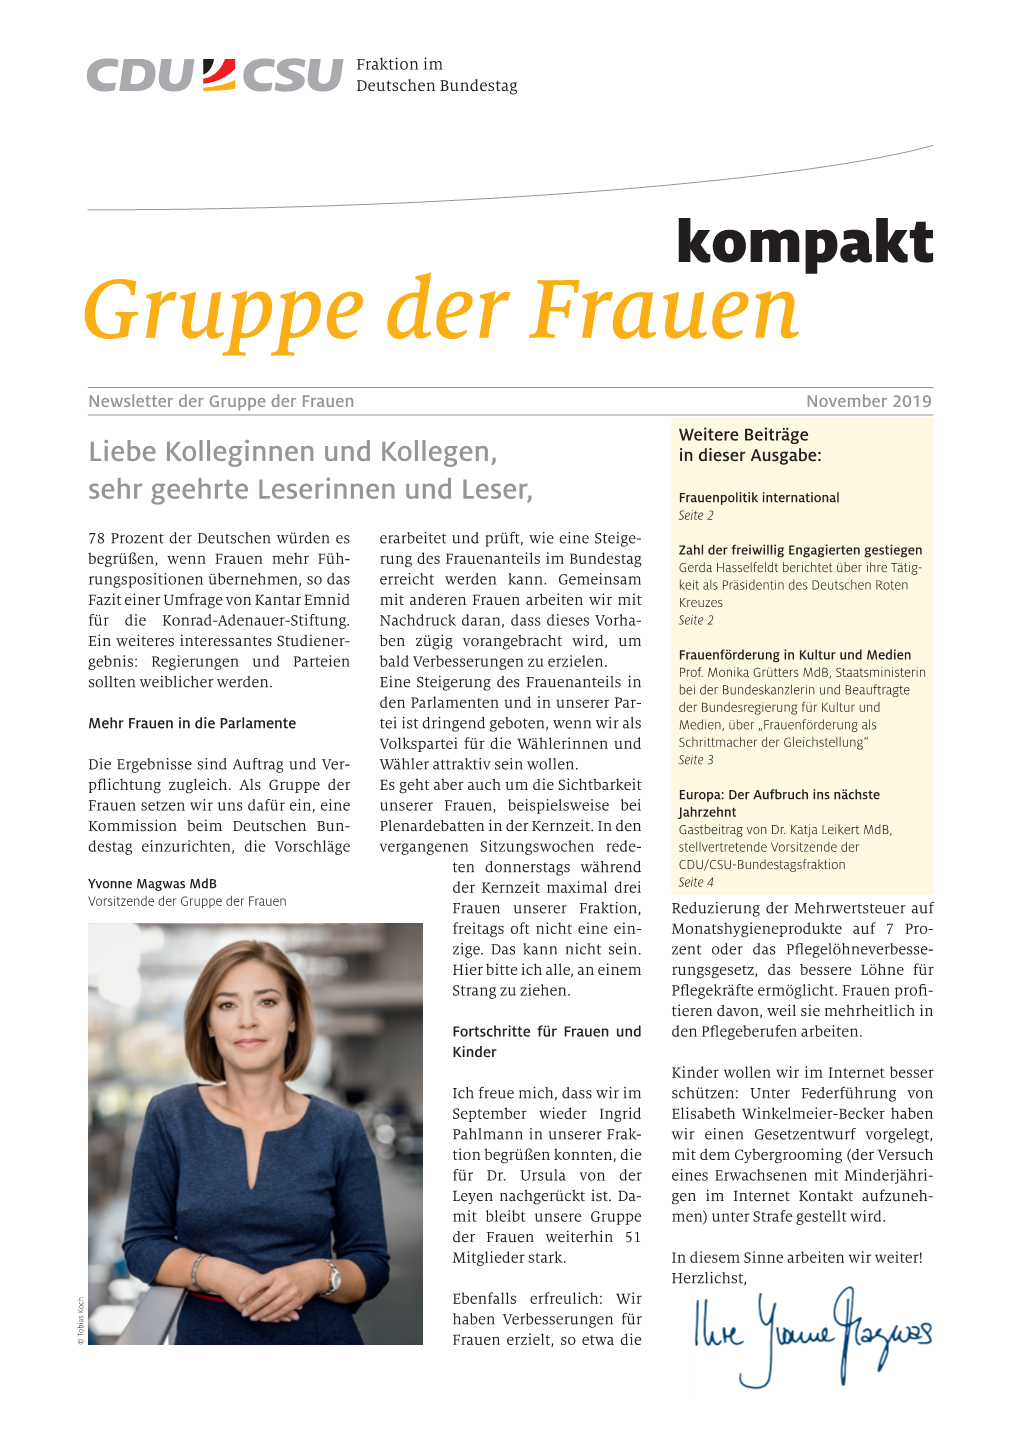 Newsletter "Gruppe Der Frauen Kompakt